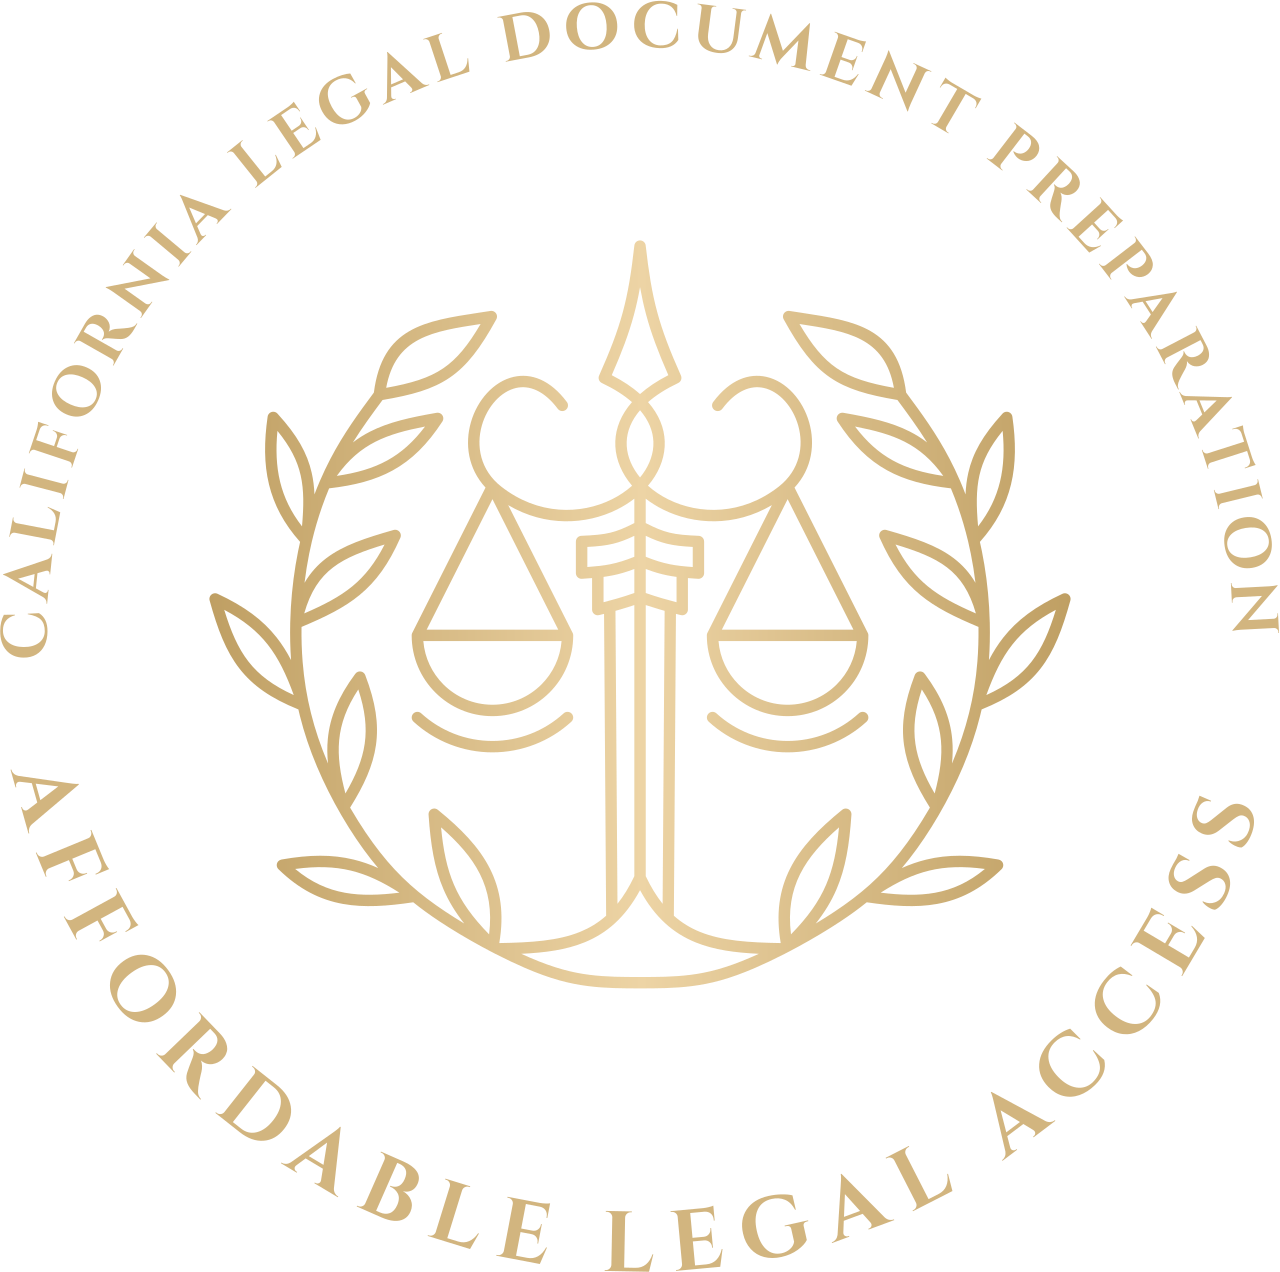 California Legal Document Preparation 's logo